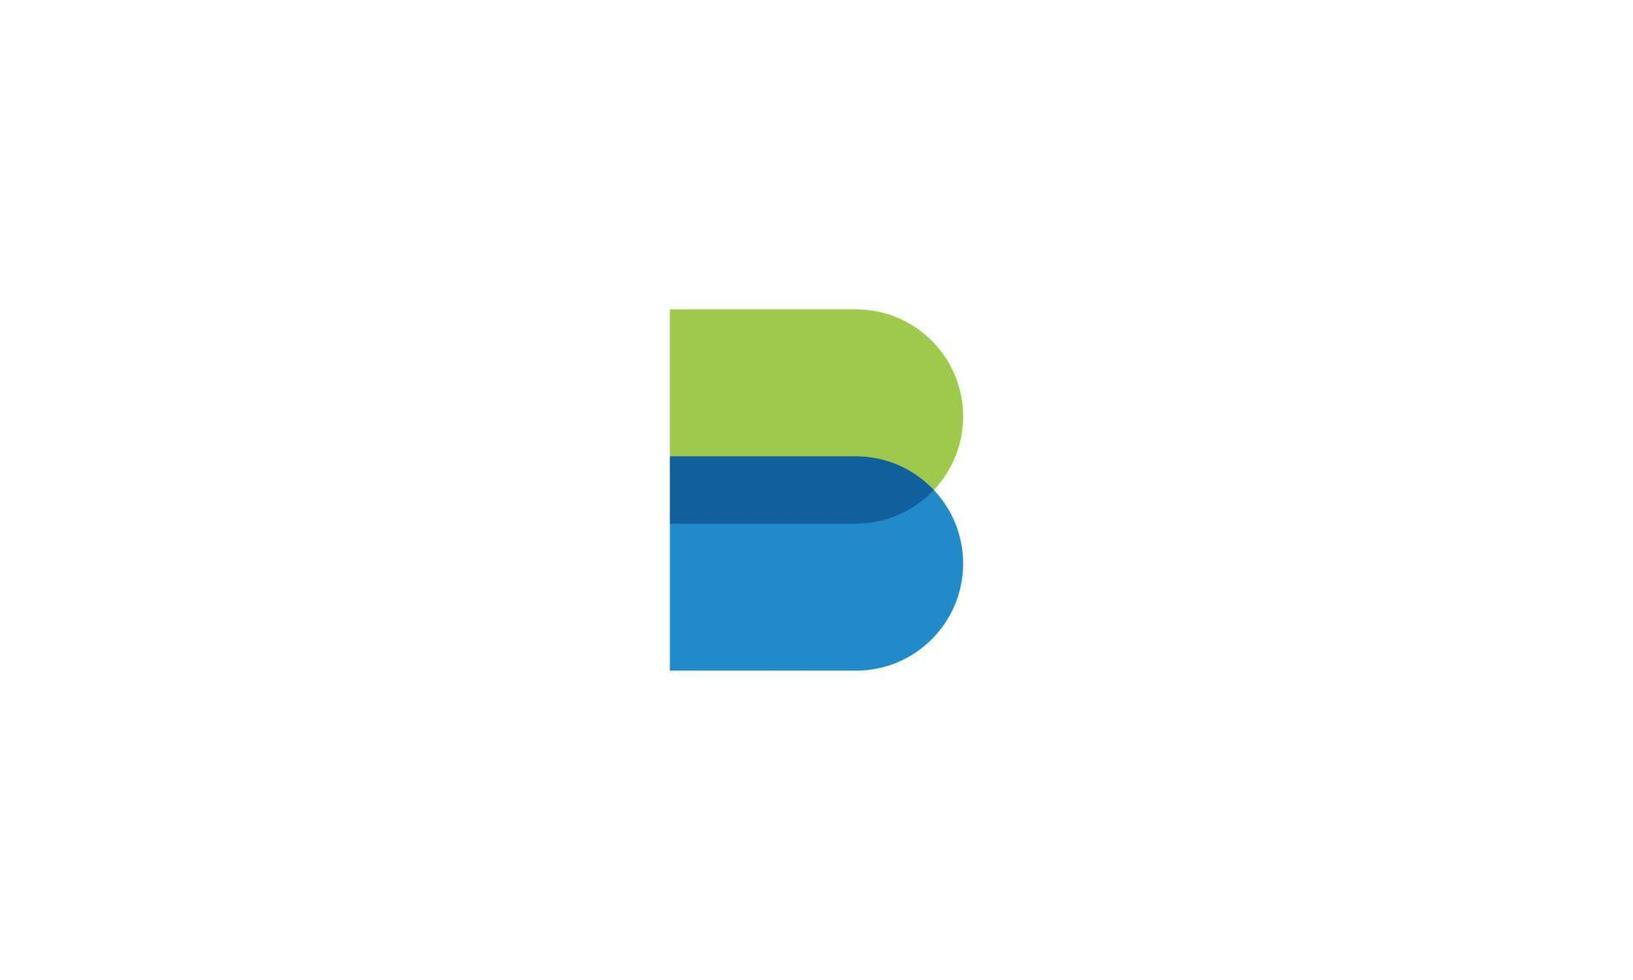 B logo . Abstract Letter B logo design. modern colorful overlay style. vector illustration